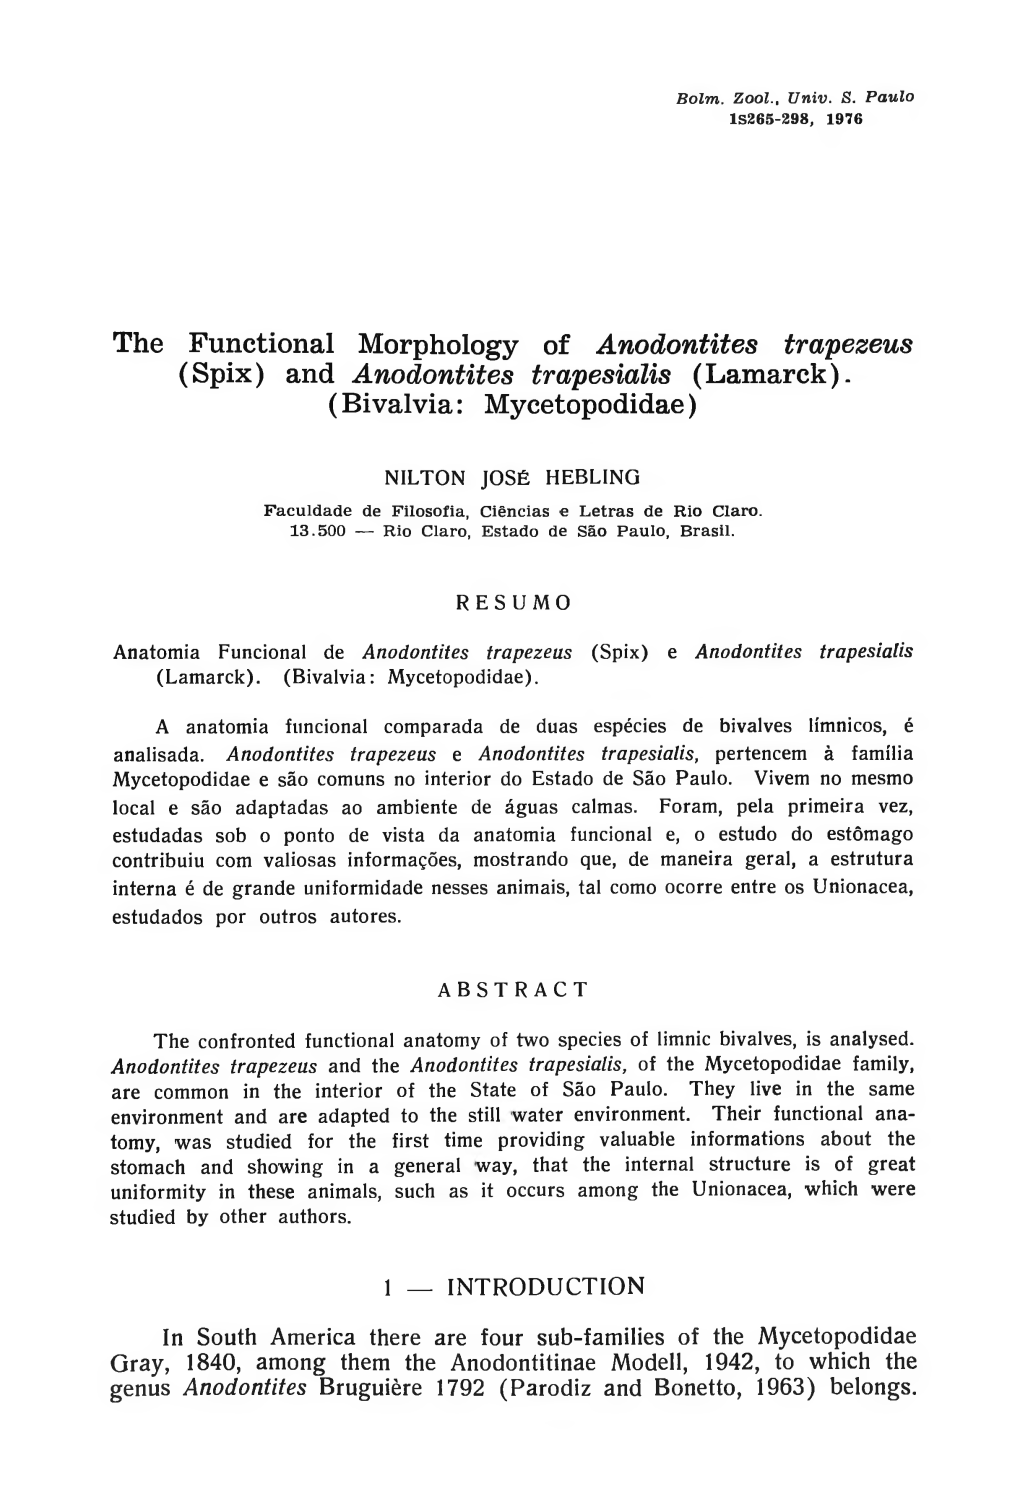 The Functional Morphology of Anodontites Trapezeus (Spix) and Anodontites Trapesialis (Lamarck)